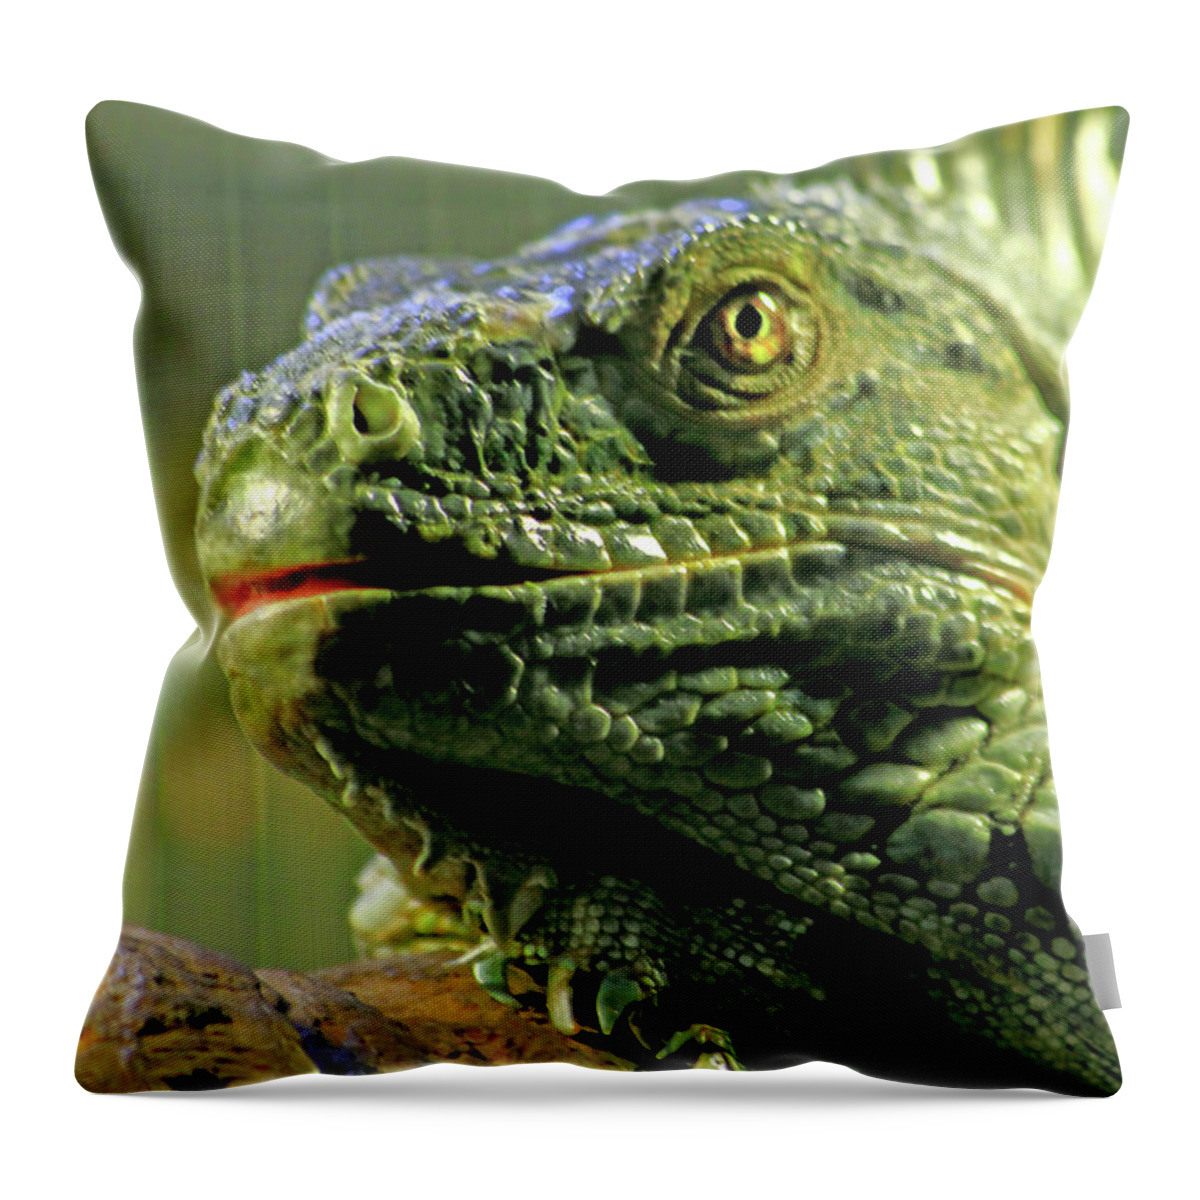 Iguana Throw Pillow featuring the photograph Iguana by Miroslava Jurcik